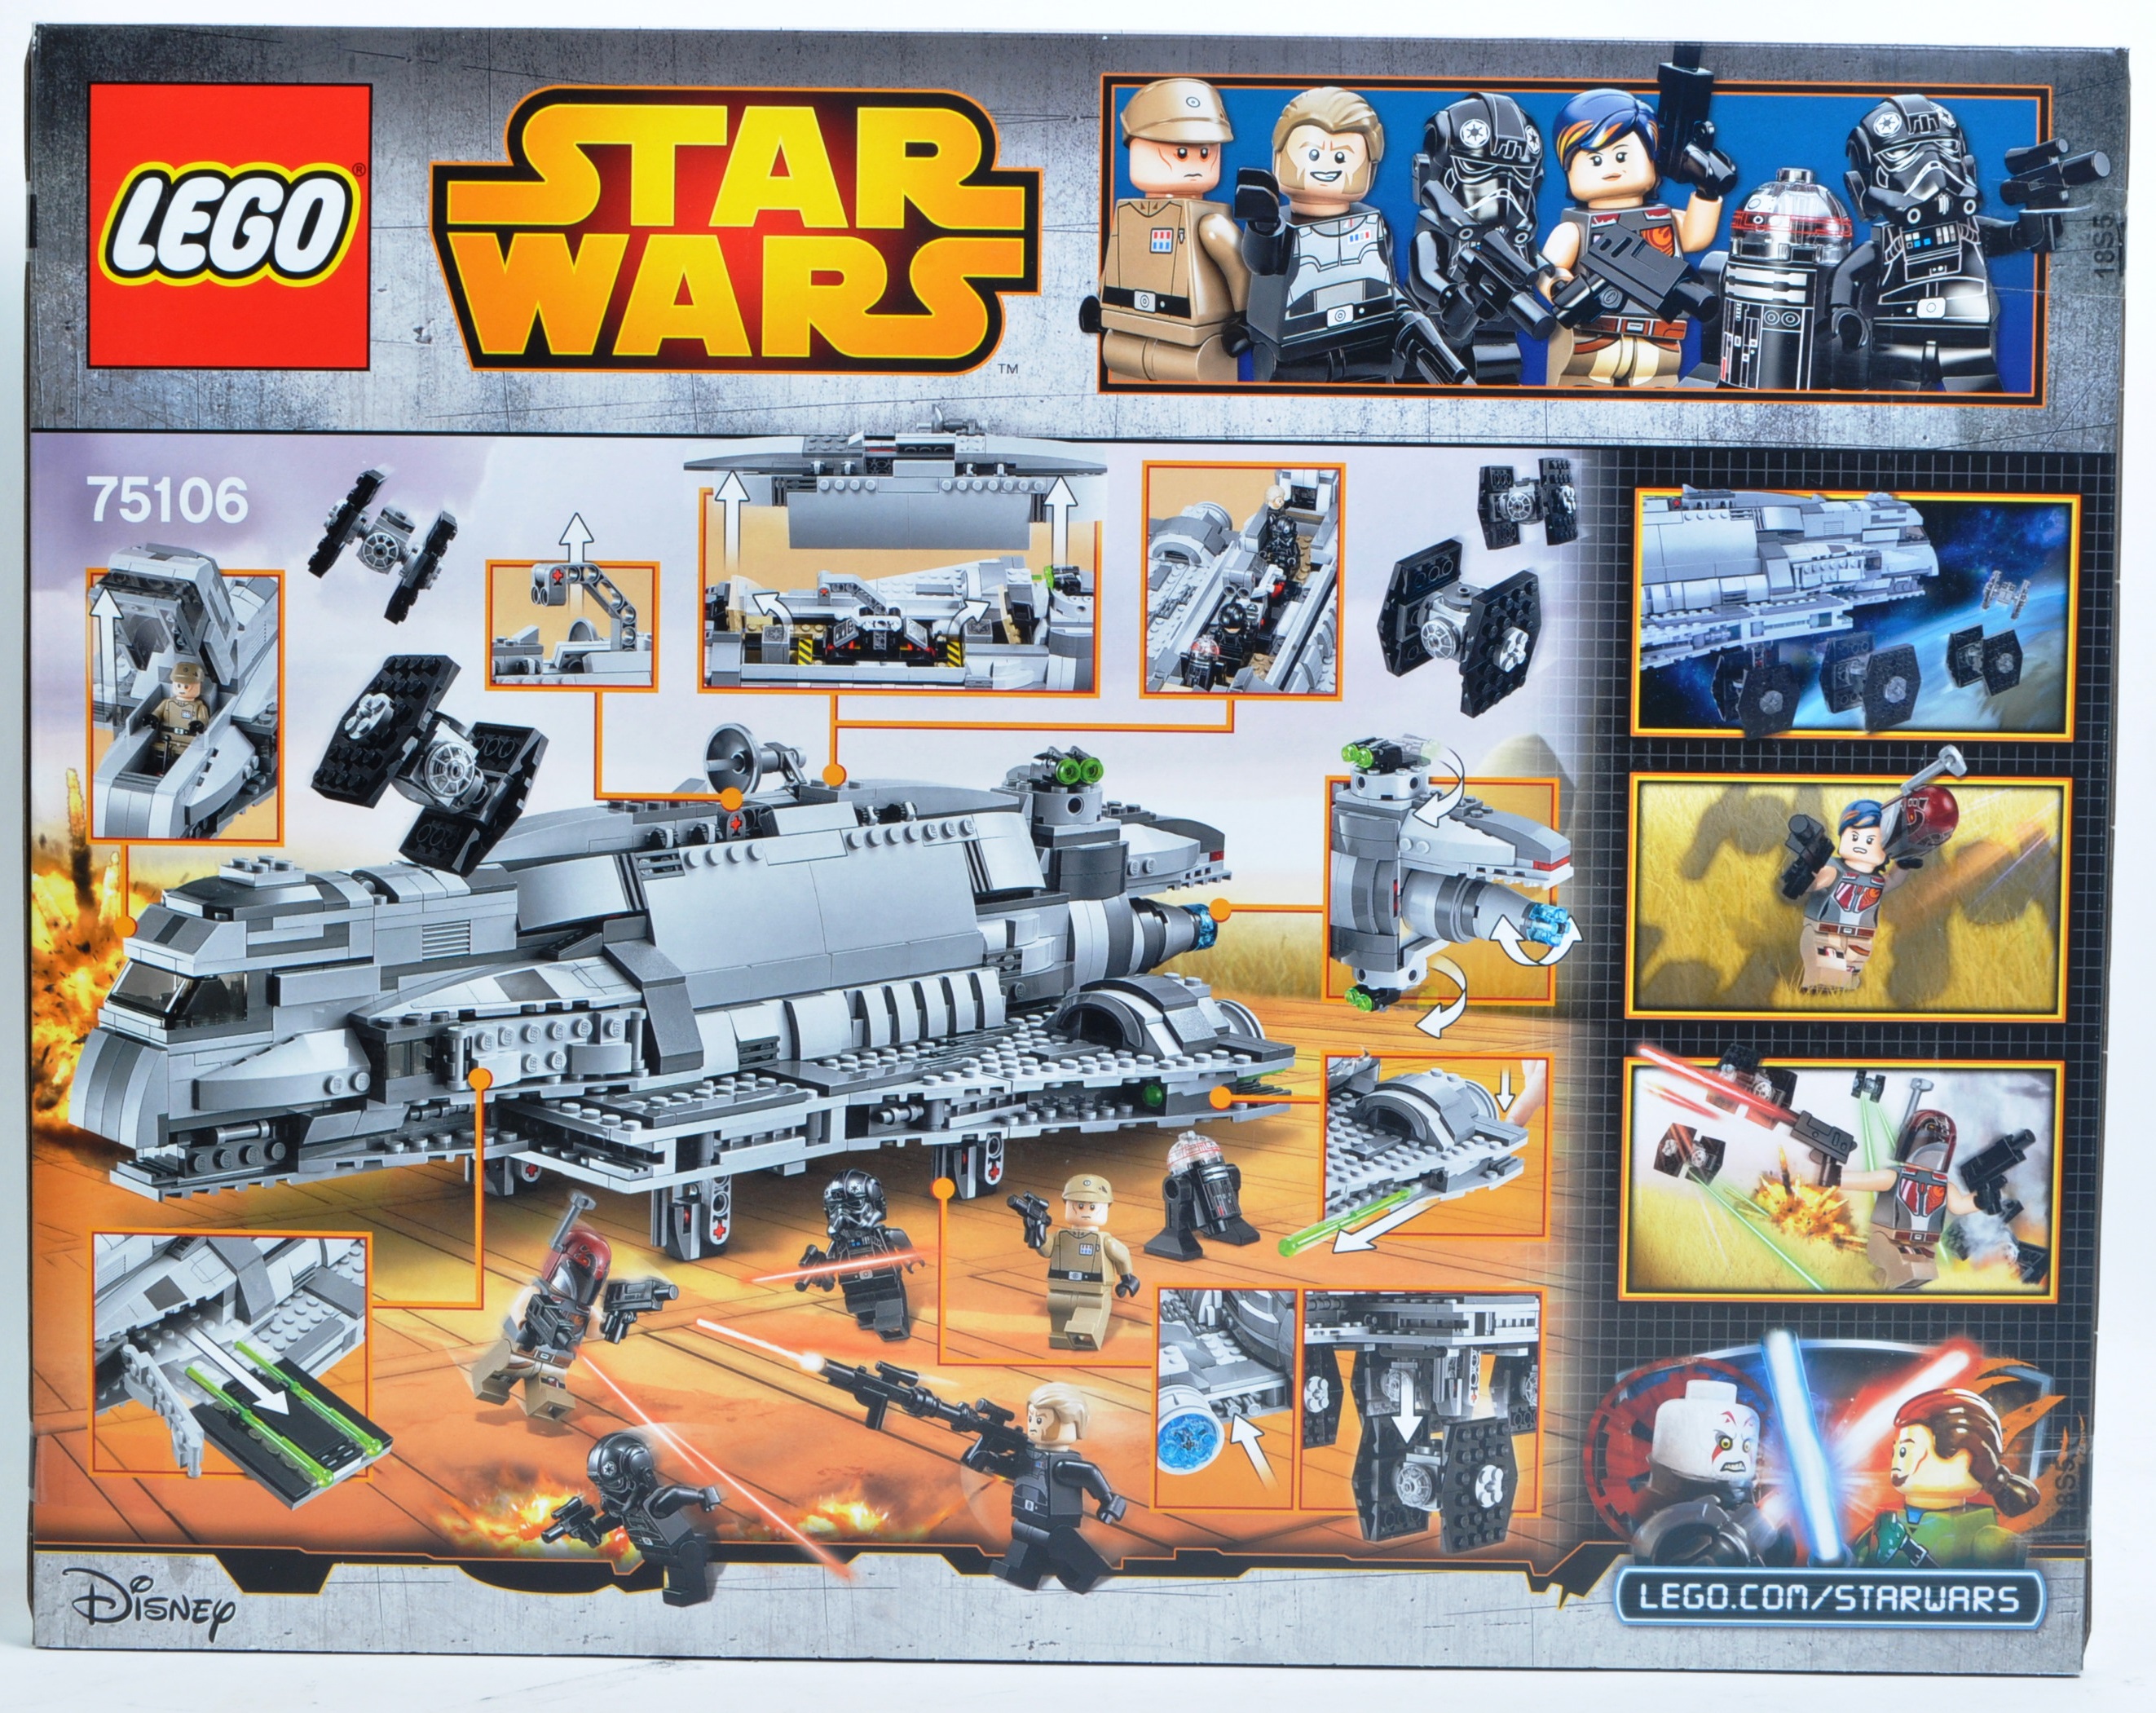 LEGO SET - LEGO STAR WARS - 75106 - IMPERIAL ASSAULT CARRIER - Image 2 of 3